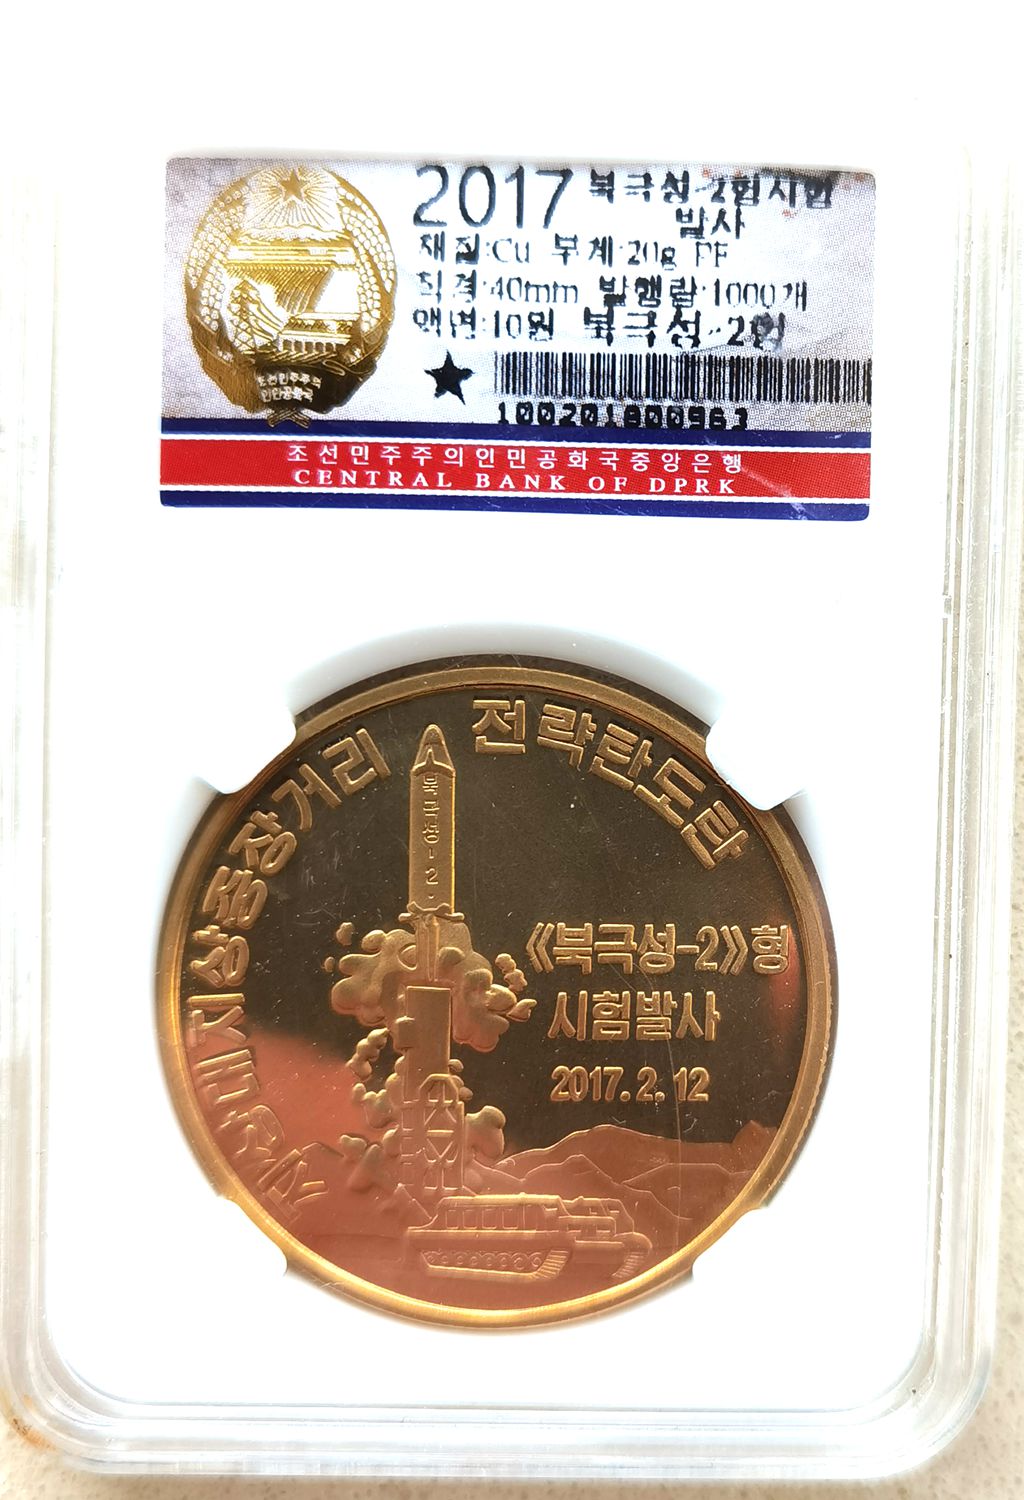 L3308, Korea Proof Coin "Missile" 2016 - 2017 Bronze 4 pcs, Korean Grade